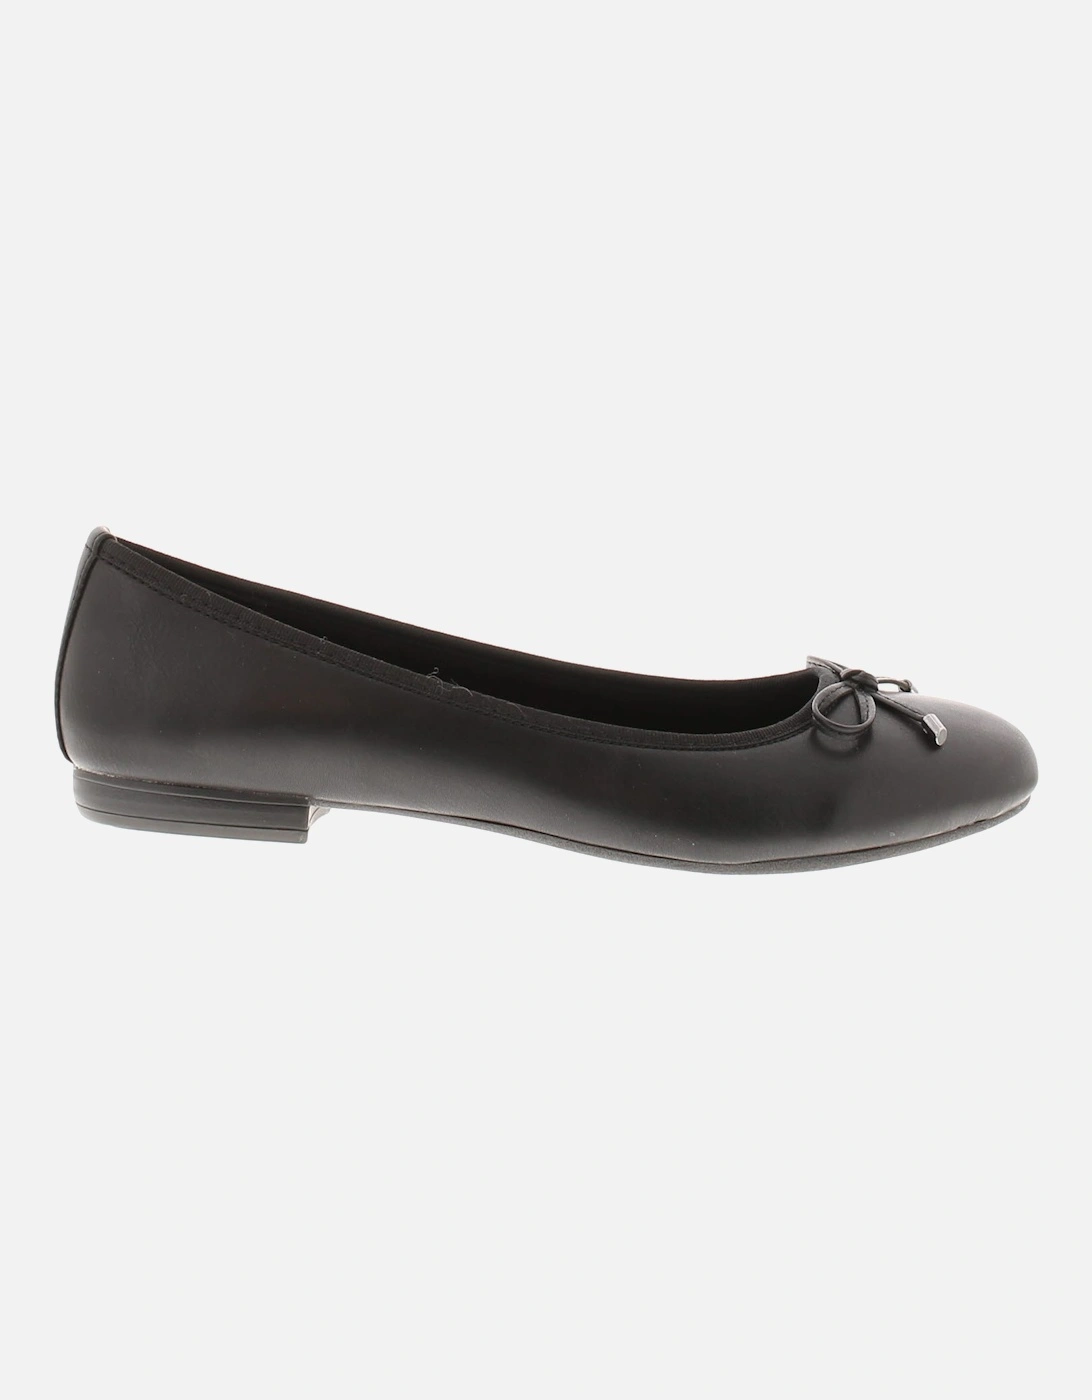 Womens Shoes Flats Ballerina Milana Slip On black UK Size